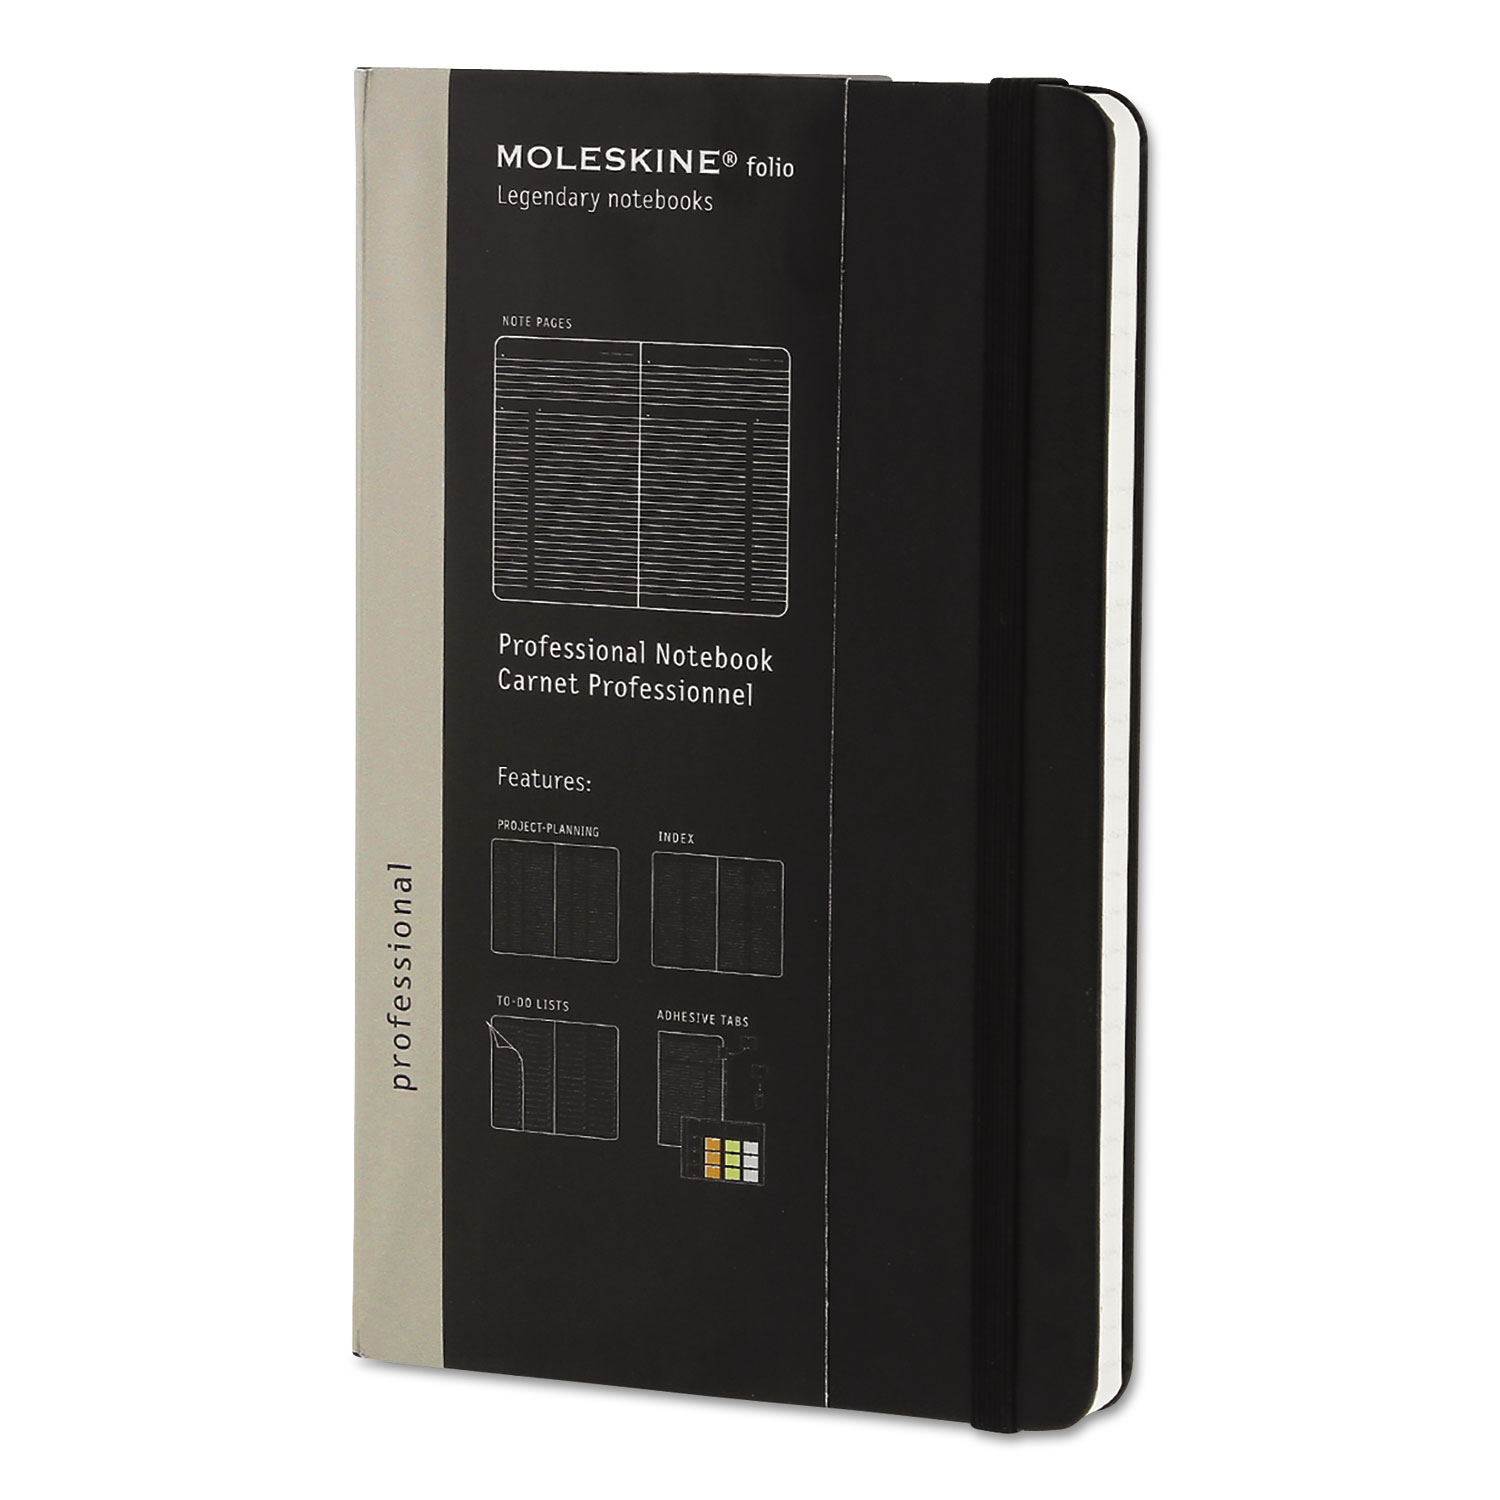  Moleskine PROPFNTB3HBK Professional Notebook, Narrow Rule, Black Cover, 8.25 x 5, 240 Sheets (HBGPROPFNTB3HBK) 